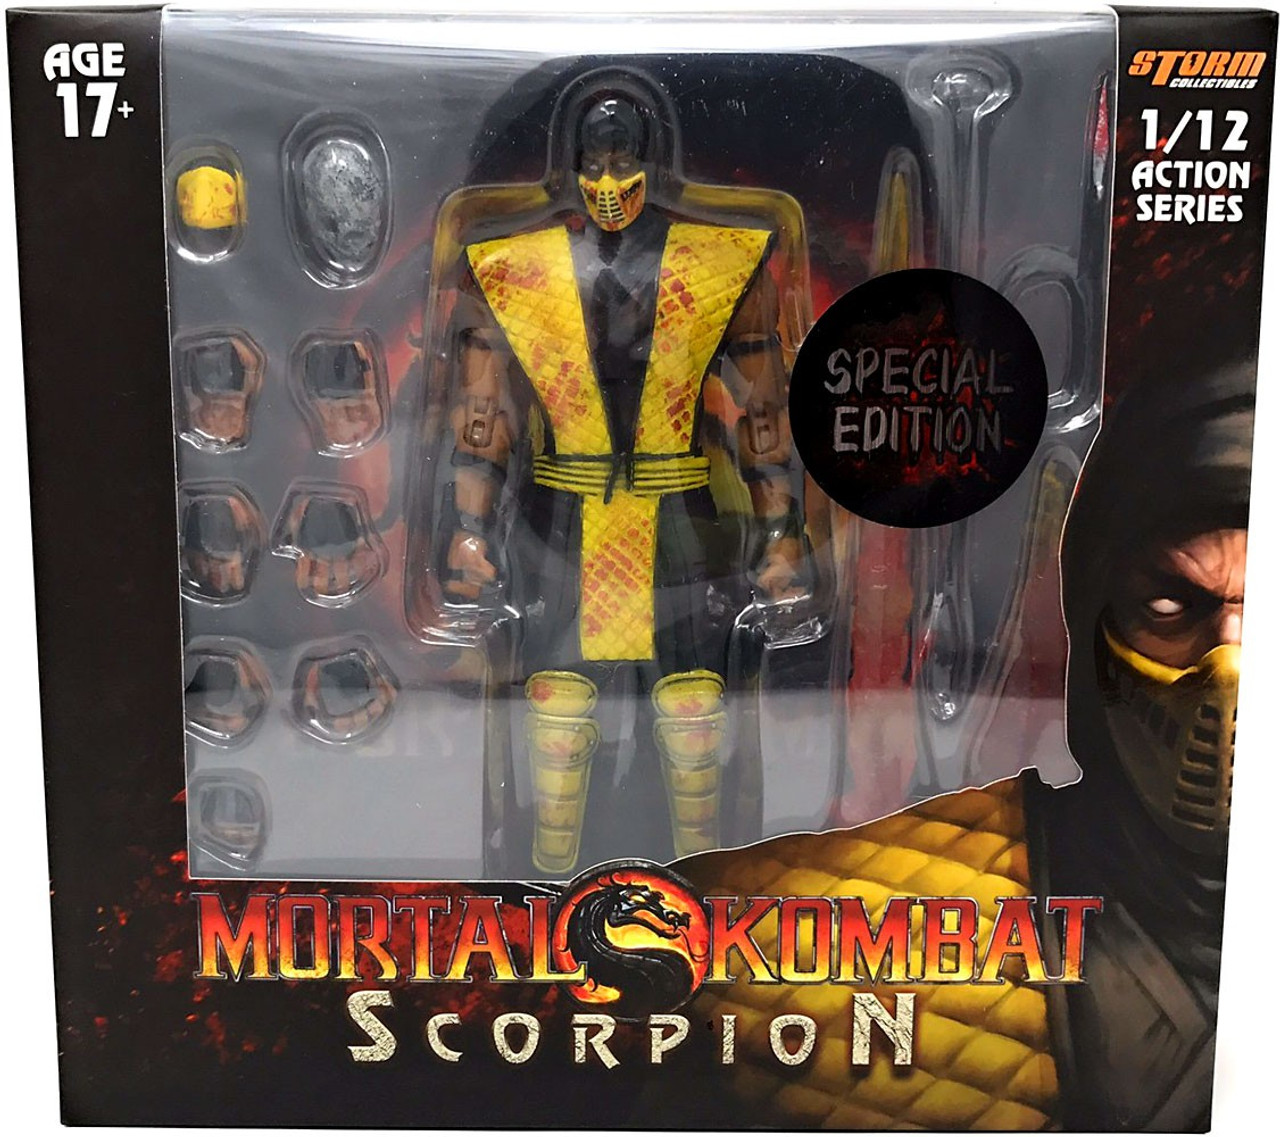 mortal kombat 9 scorpion action figure